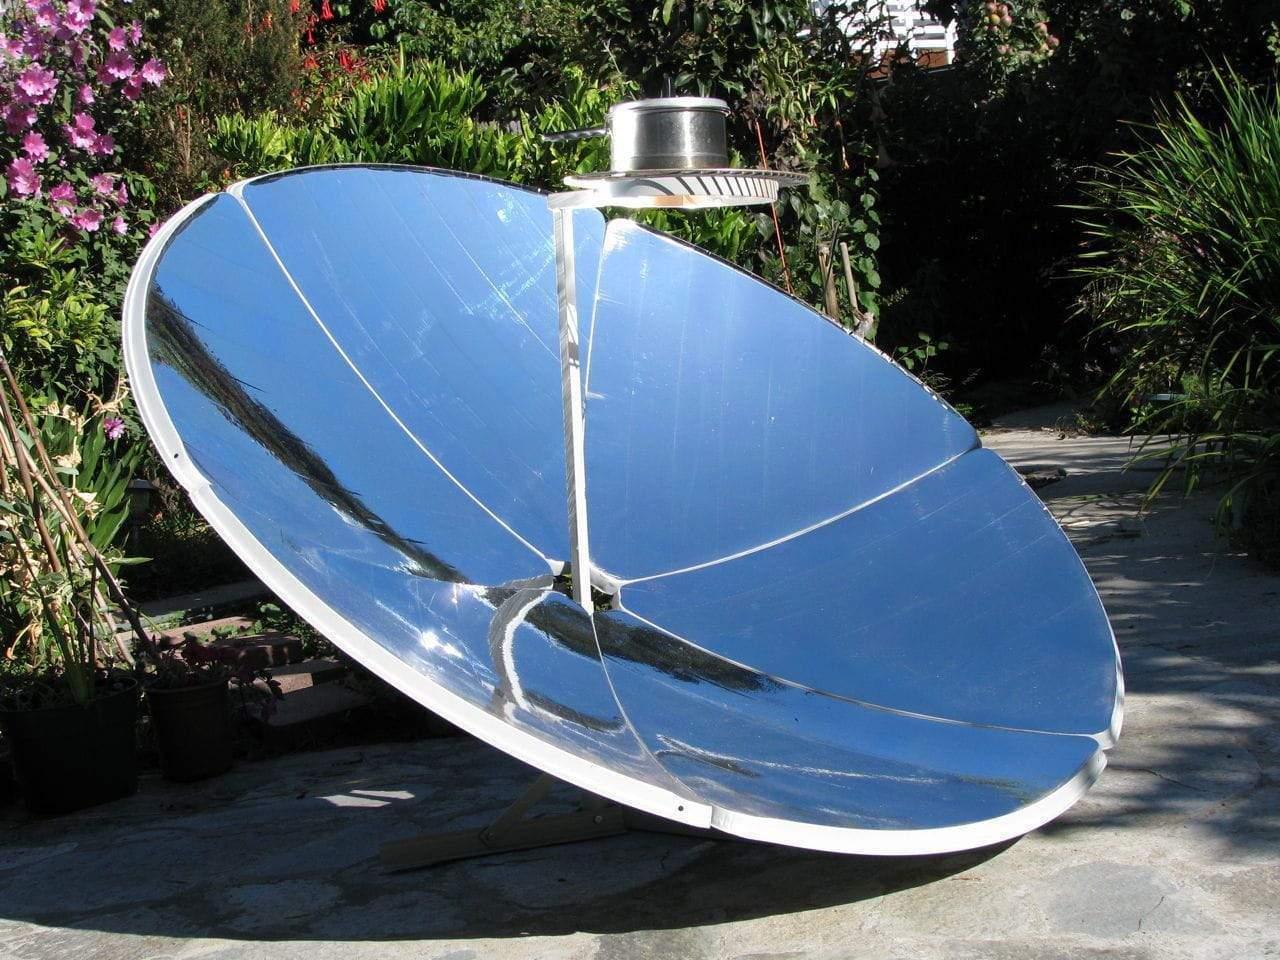 Solar Oven Designs: Dish vs Vacuum Tube